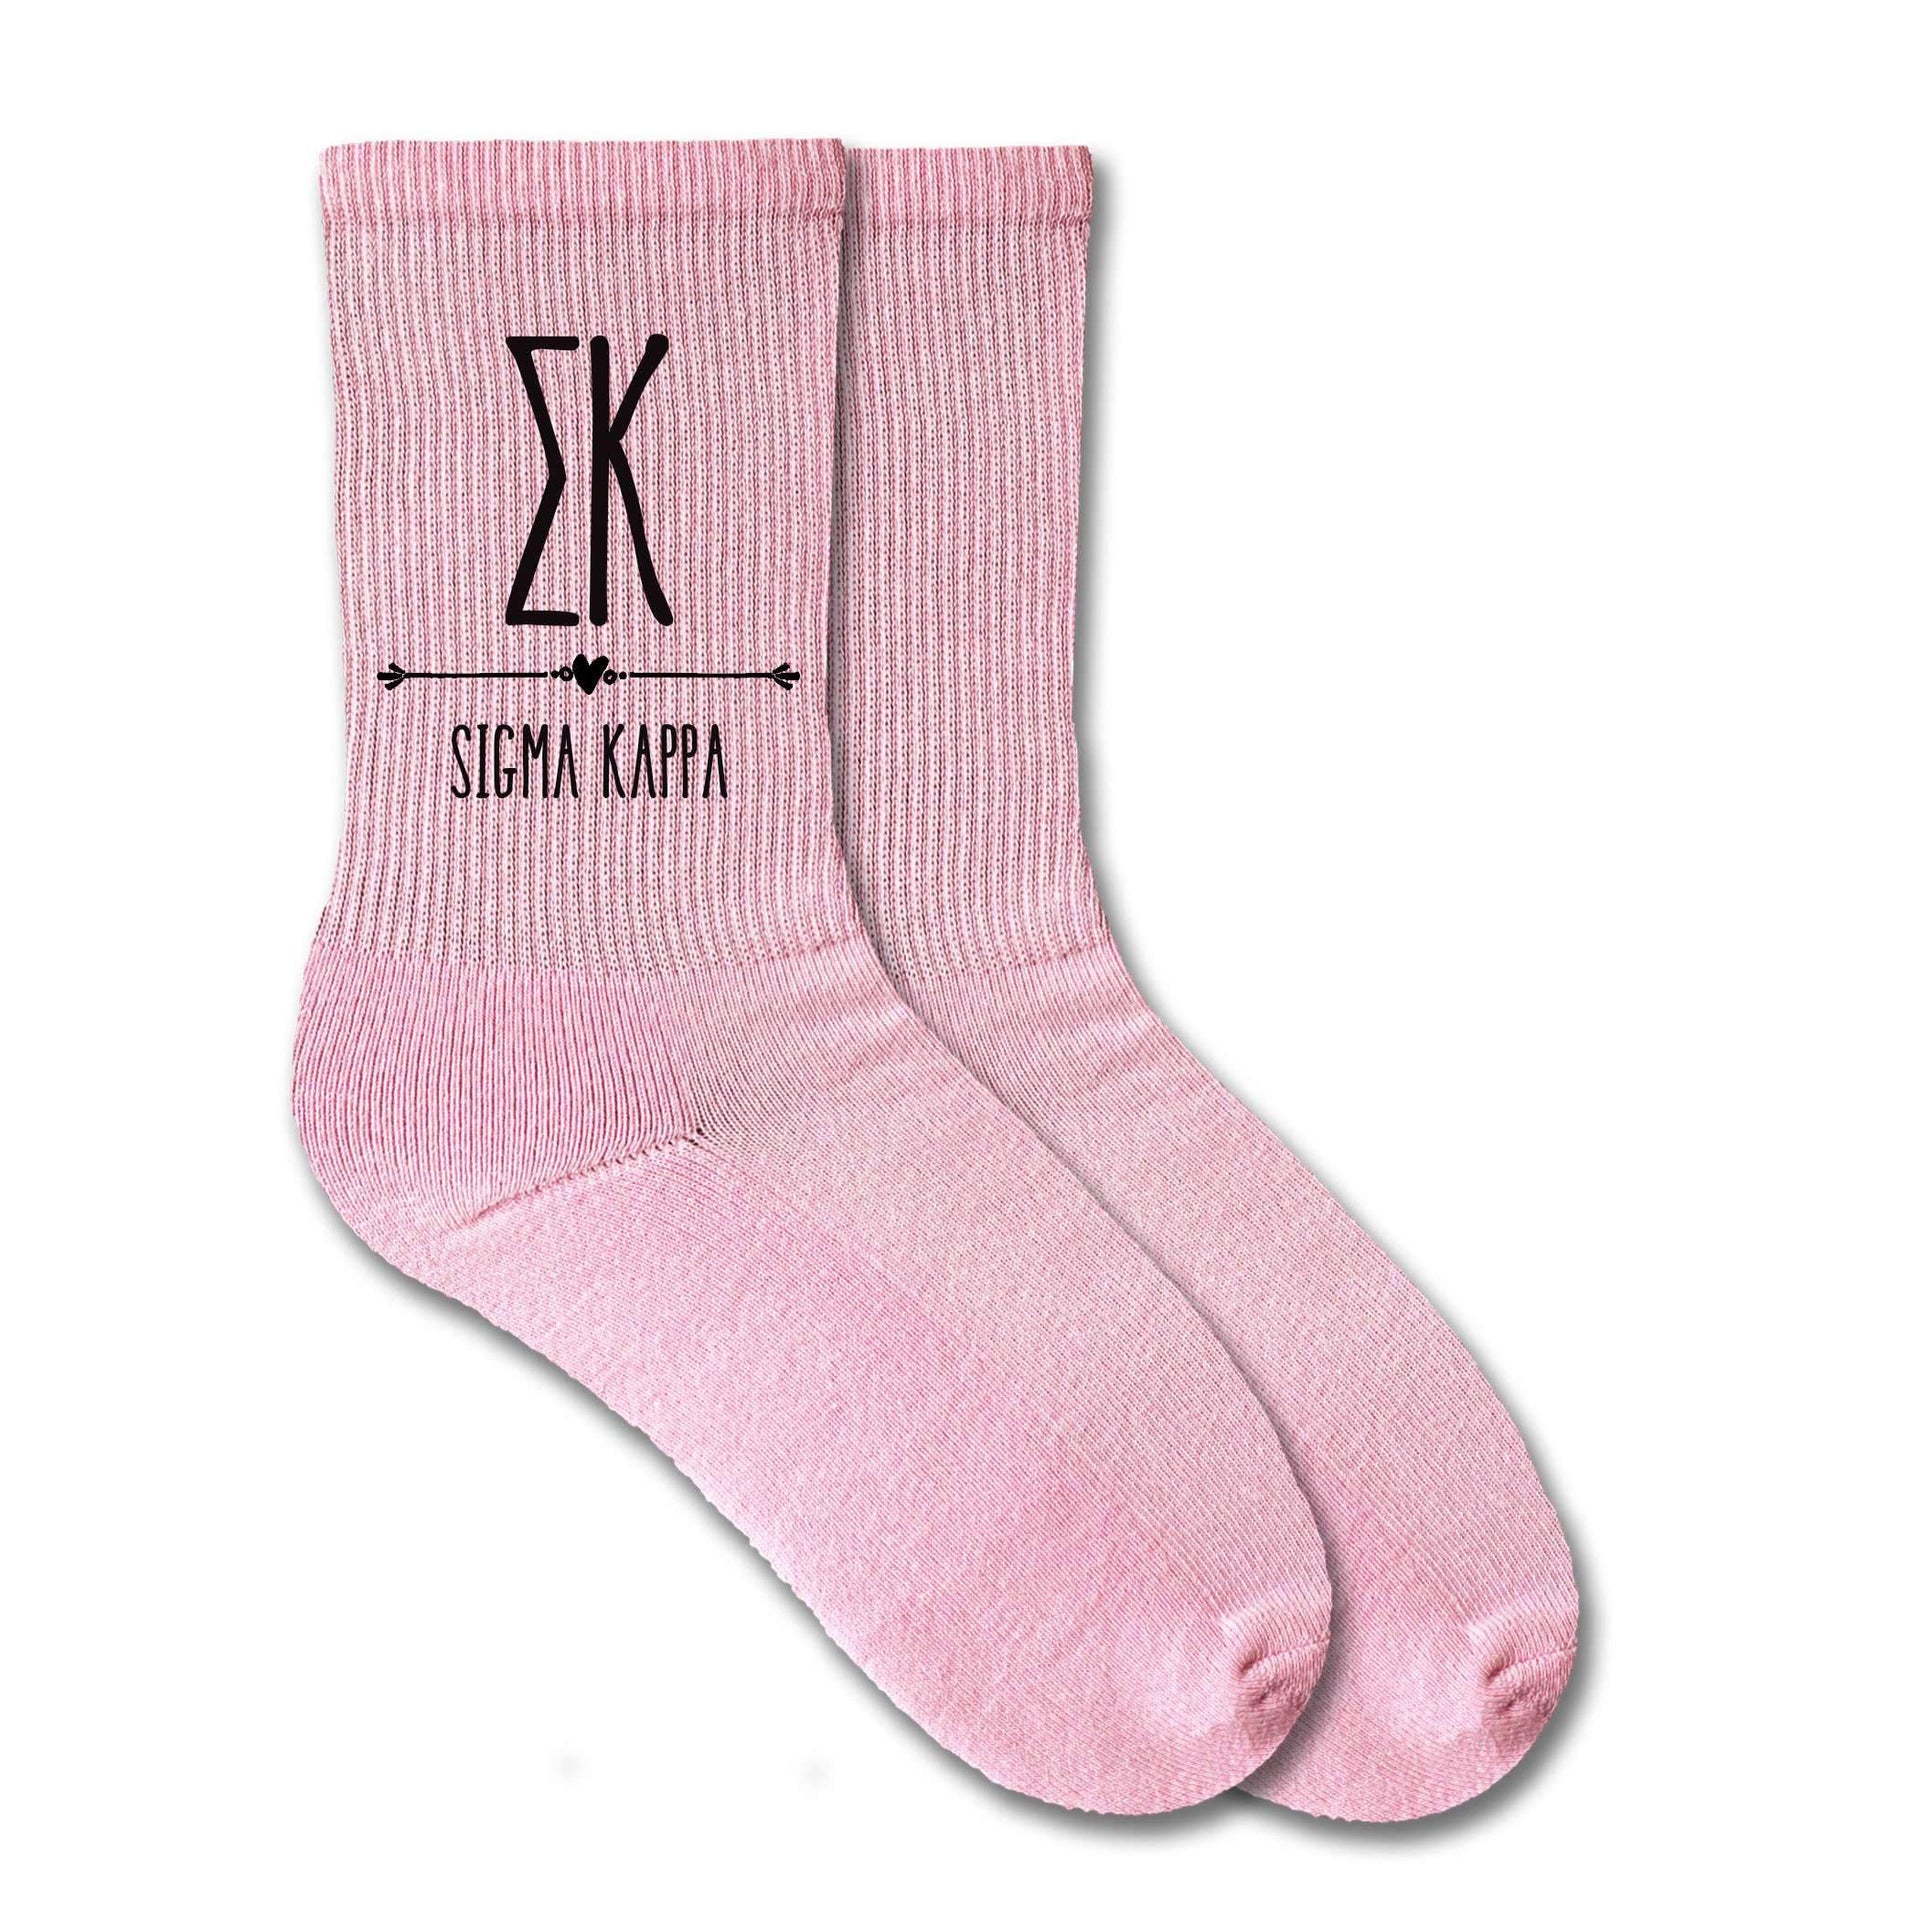 Sigma Kappa sorority letters and name custom printed on pink cotton crew socks